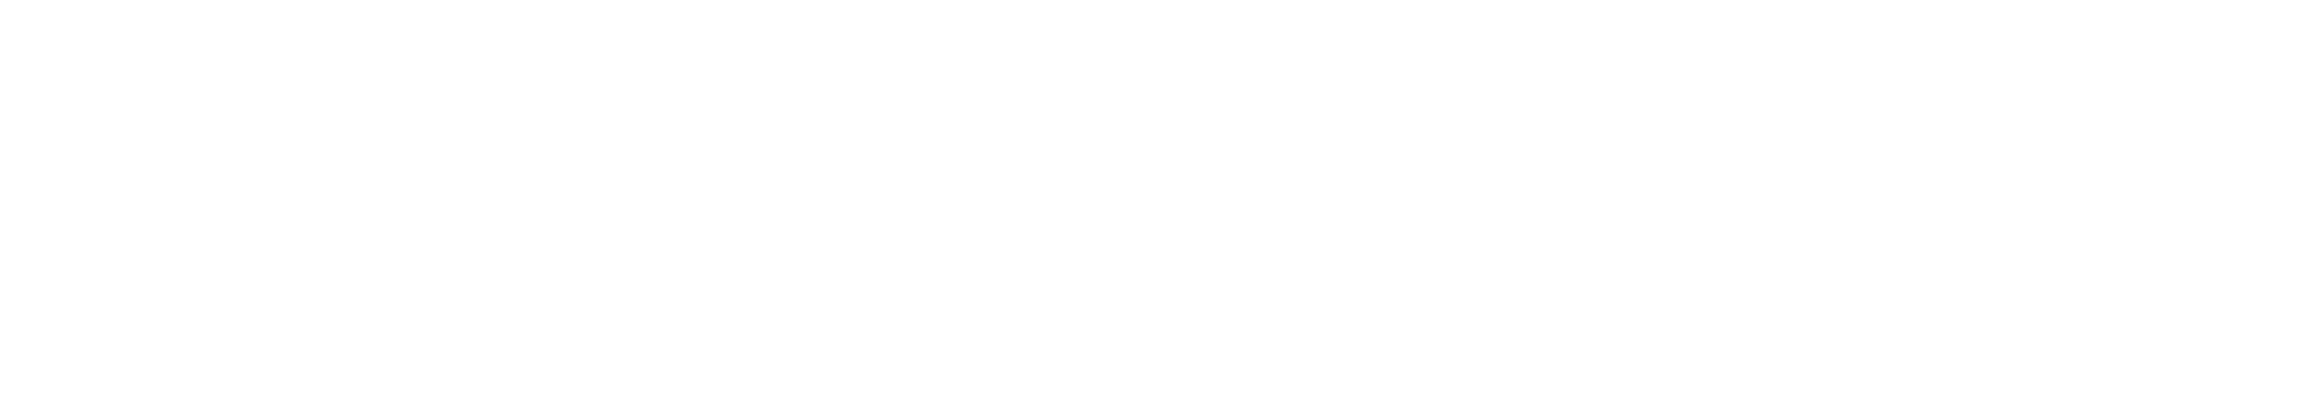 Harbor Group Management logo for The Yard At Pencoyd Landing